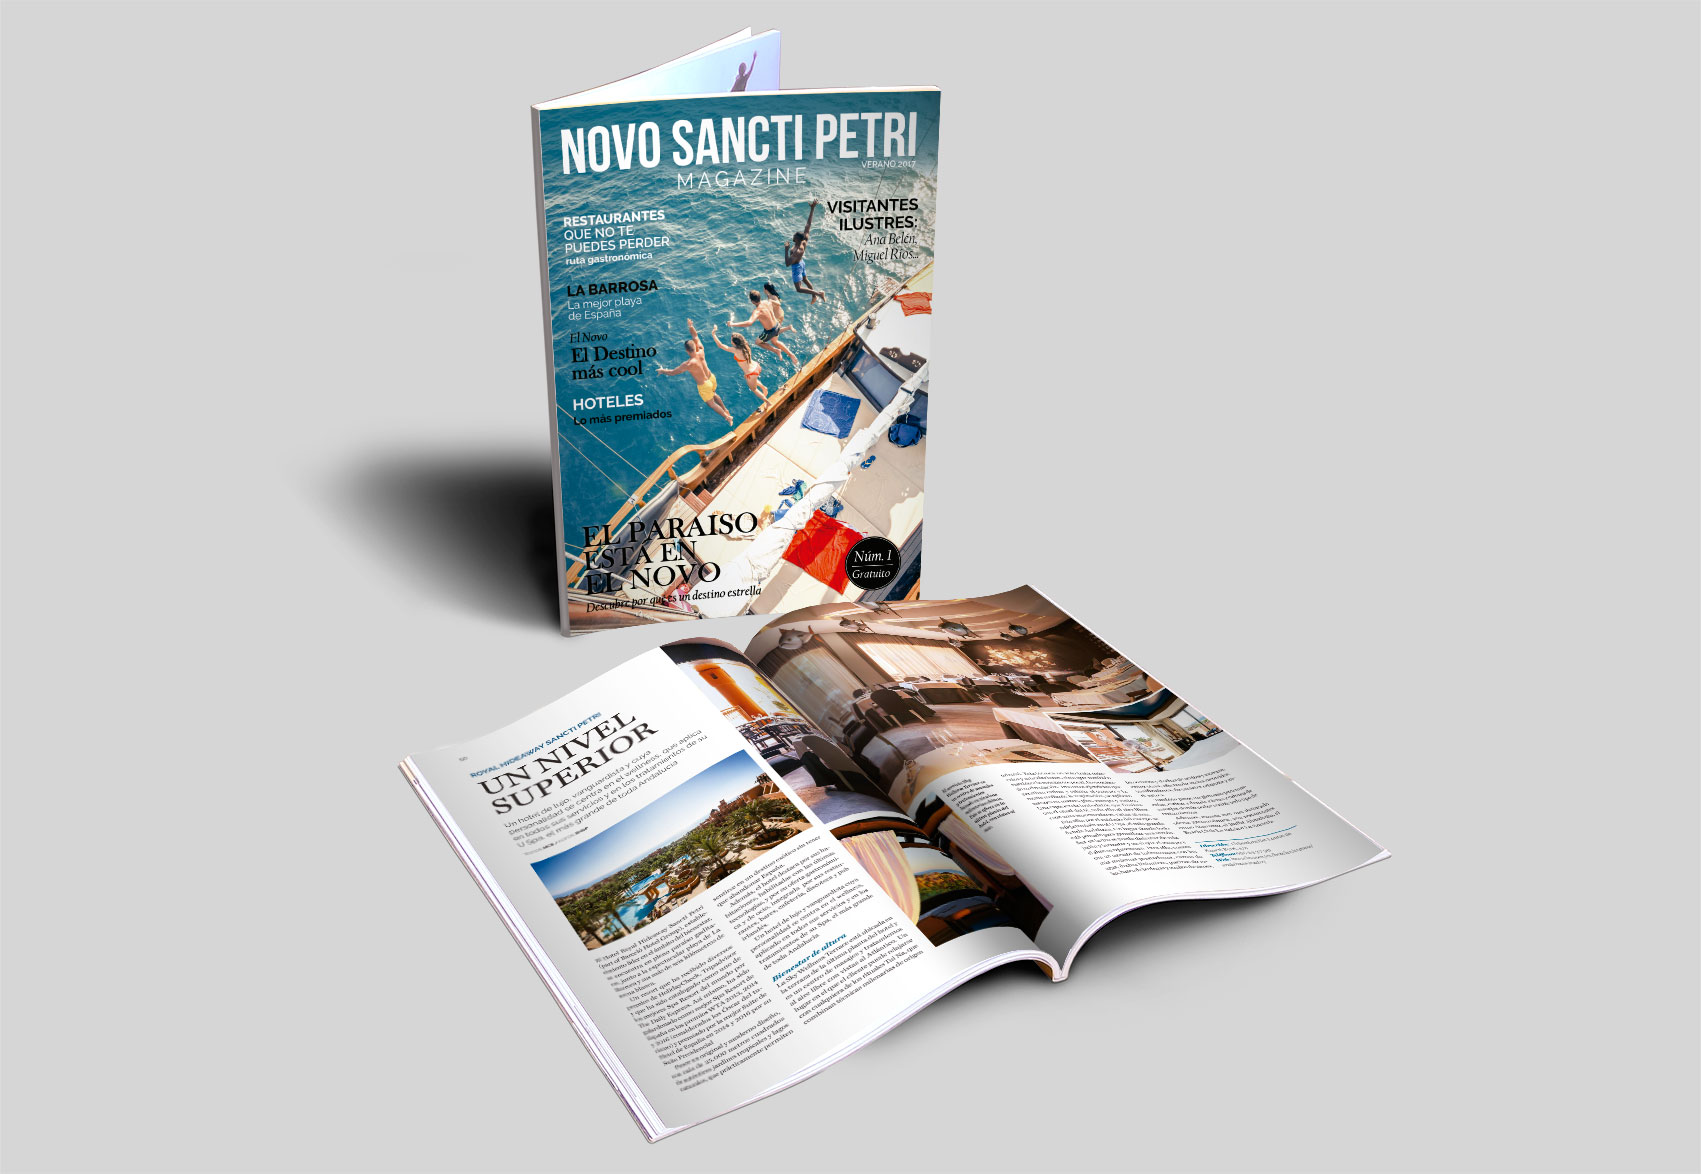 revista novo sancti petri magazine